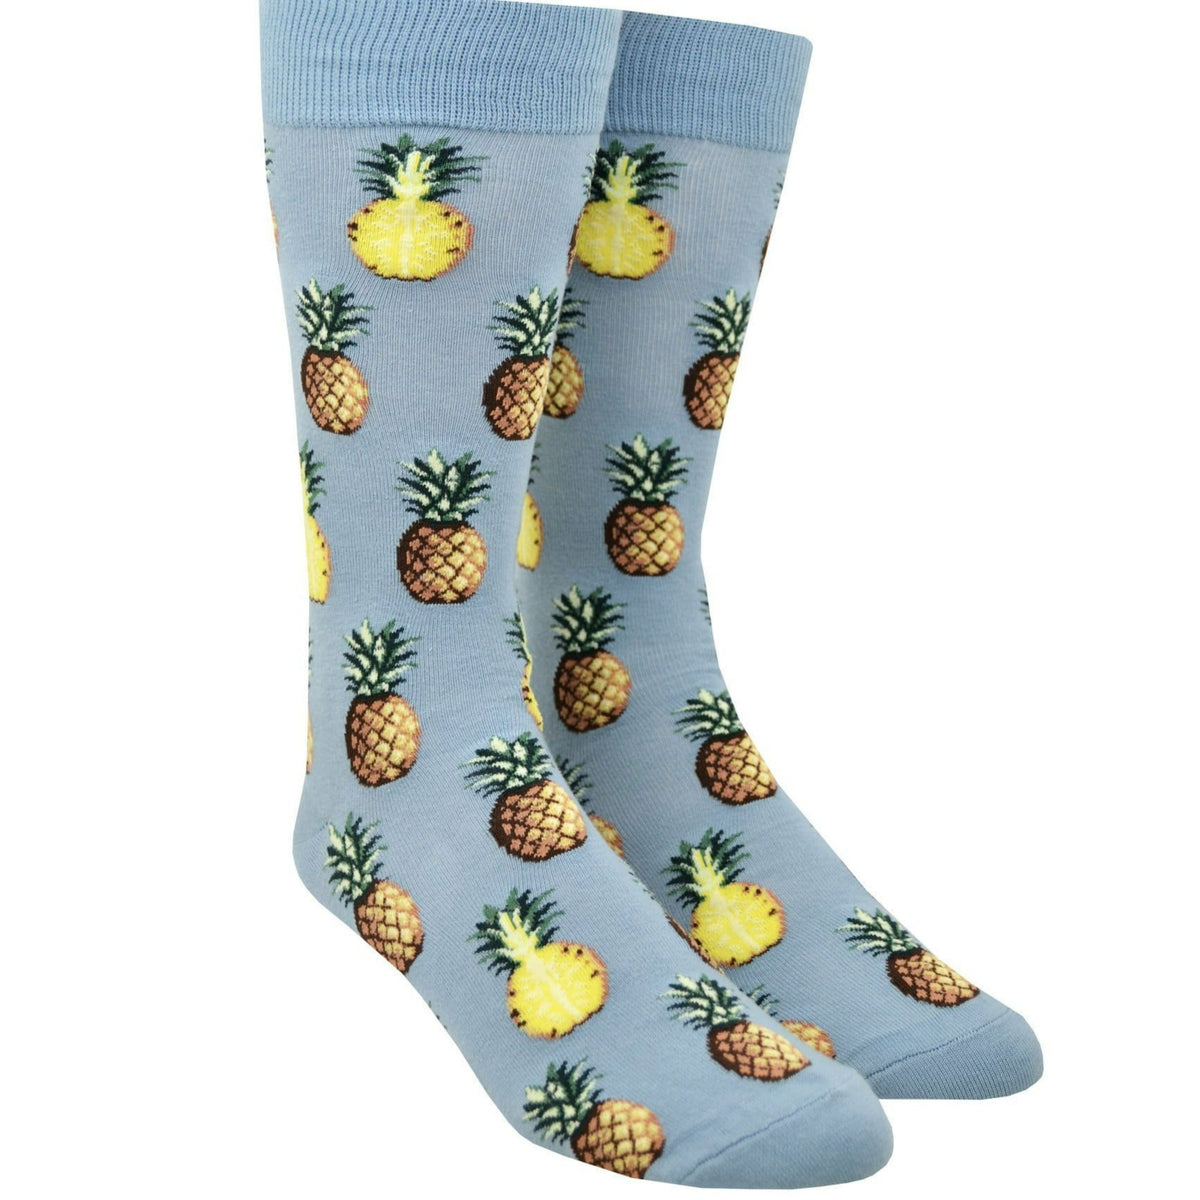 Pursuit of Pineapples Socks Men’s Crew Sock gray